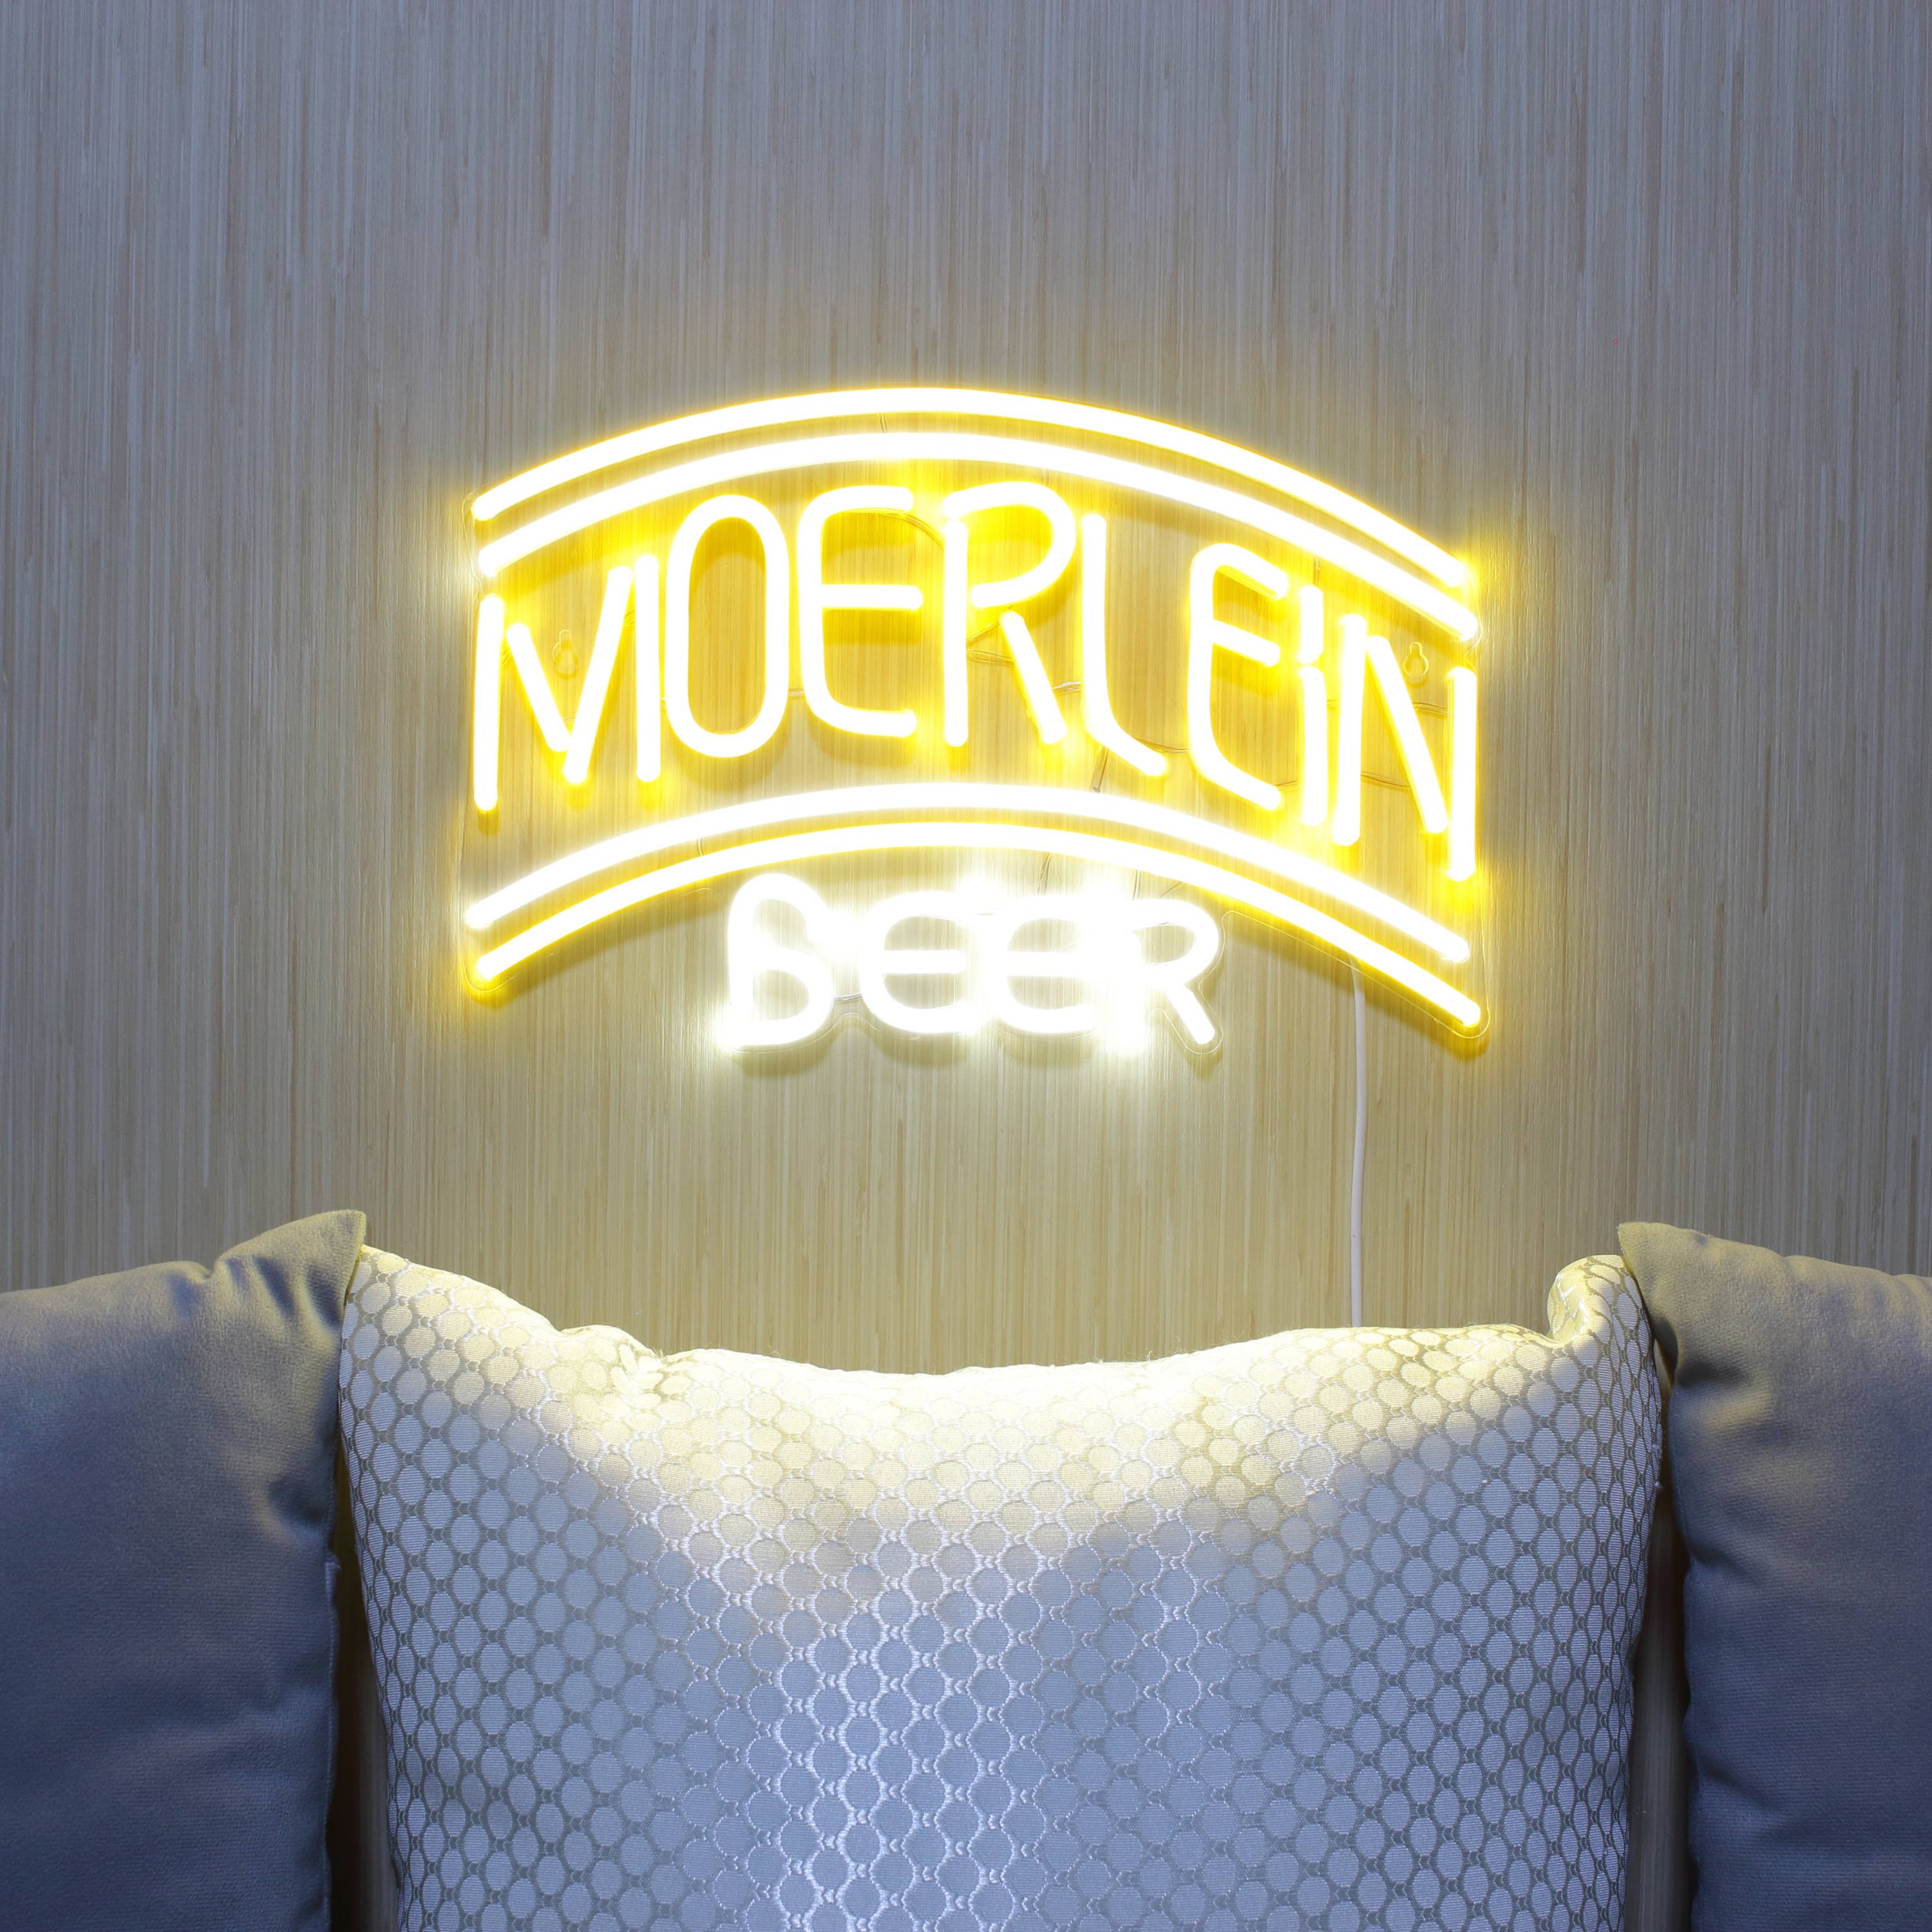 Moerlein Beer Large Flex Neon LED Sign